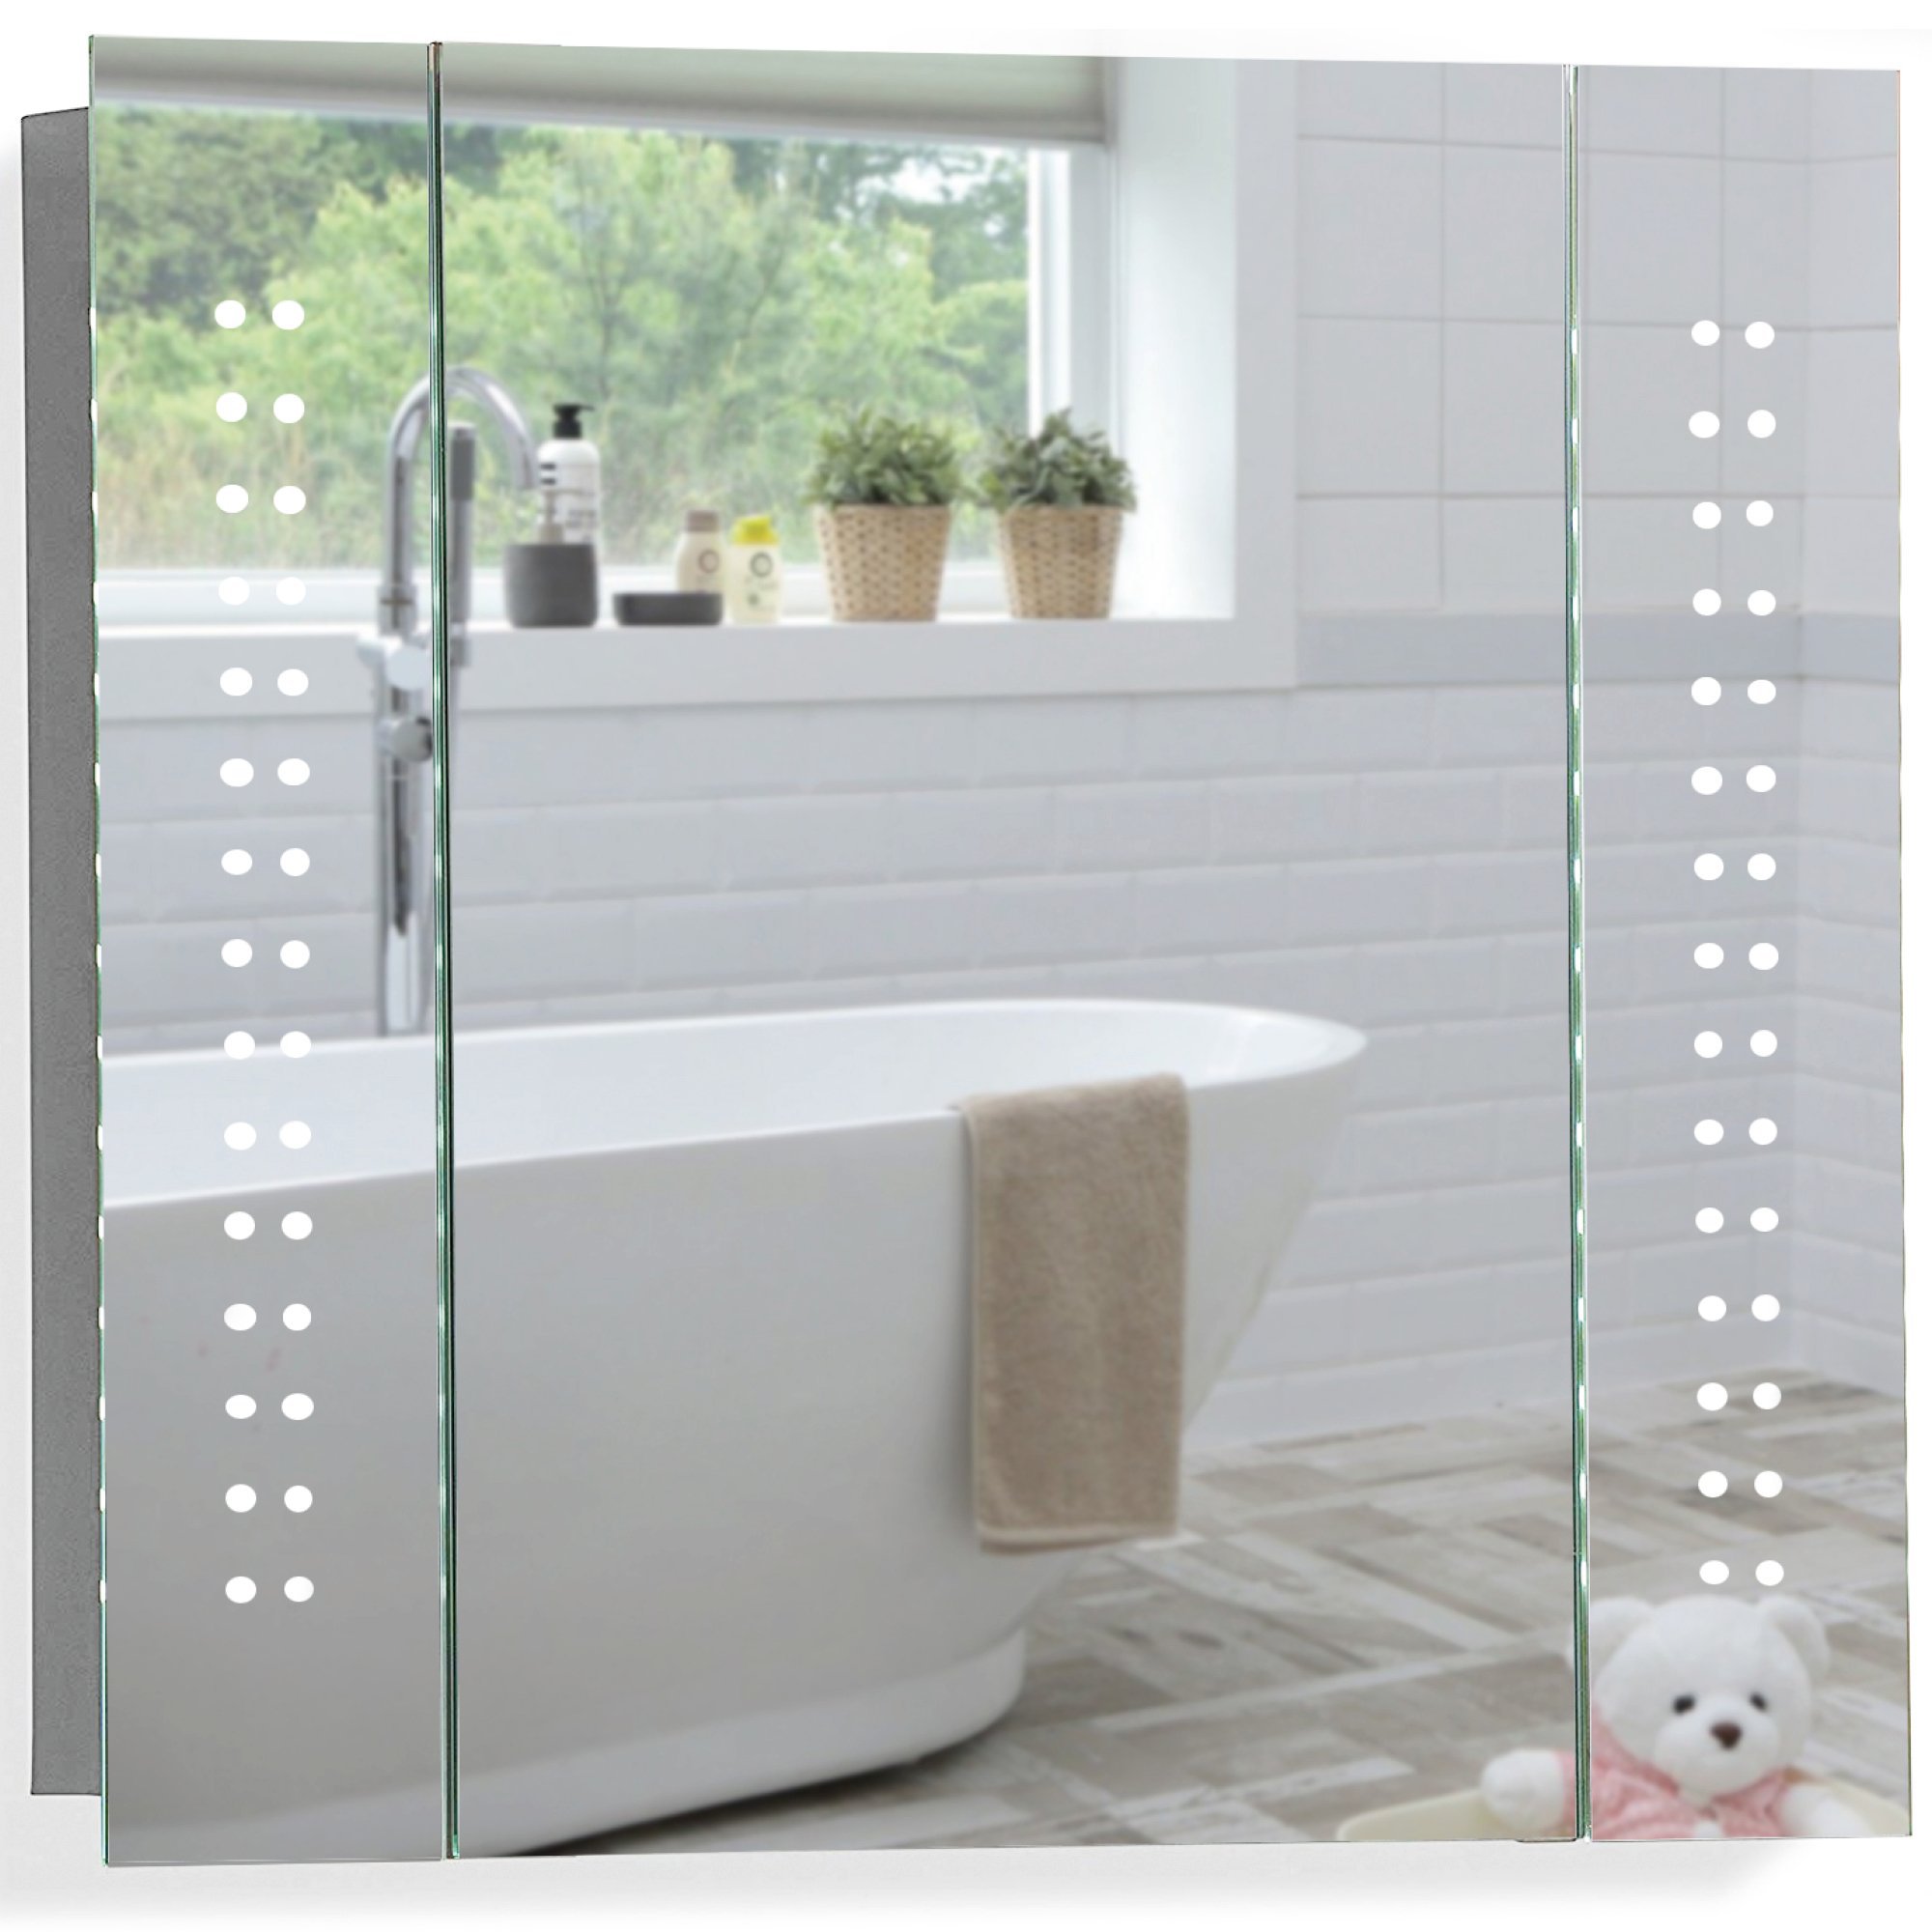 Galaxy LED Illuminated Bathroom Mirror Cabinet CABM19: Size-60Hx65Wx13.5Dcm